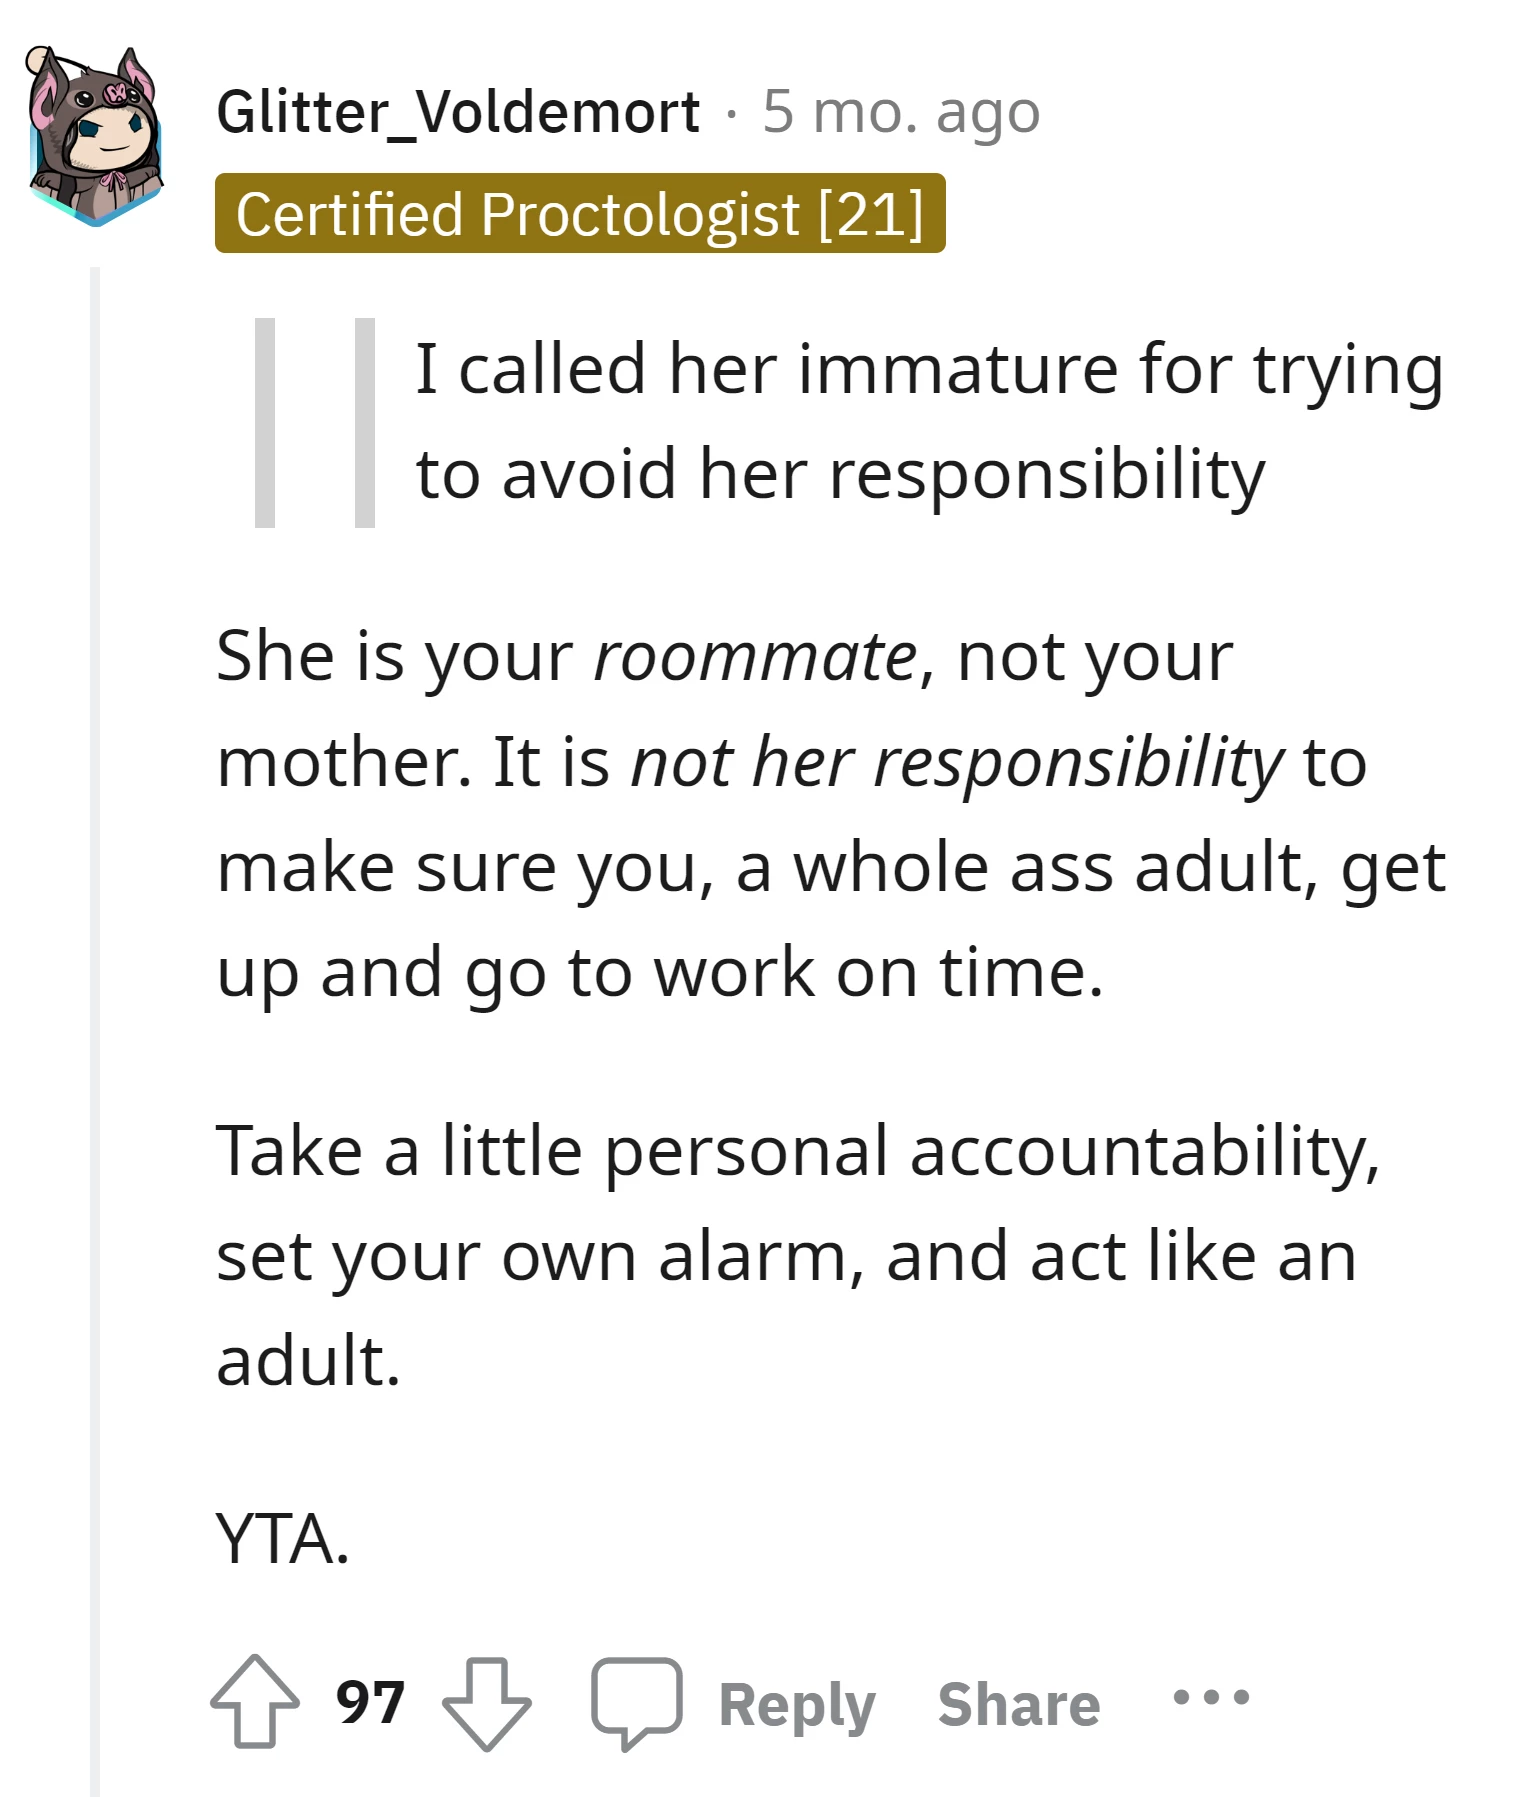 "Take a little personal accountability"